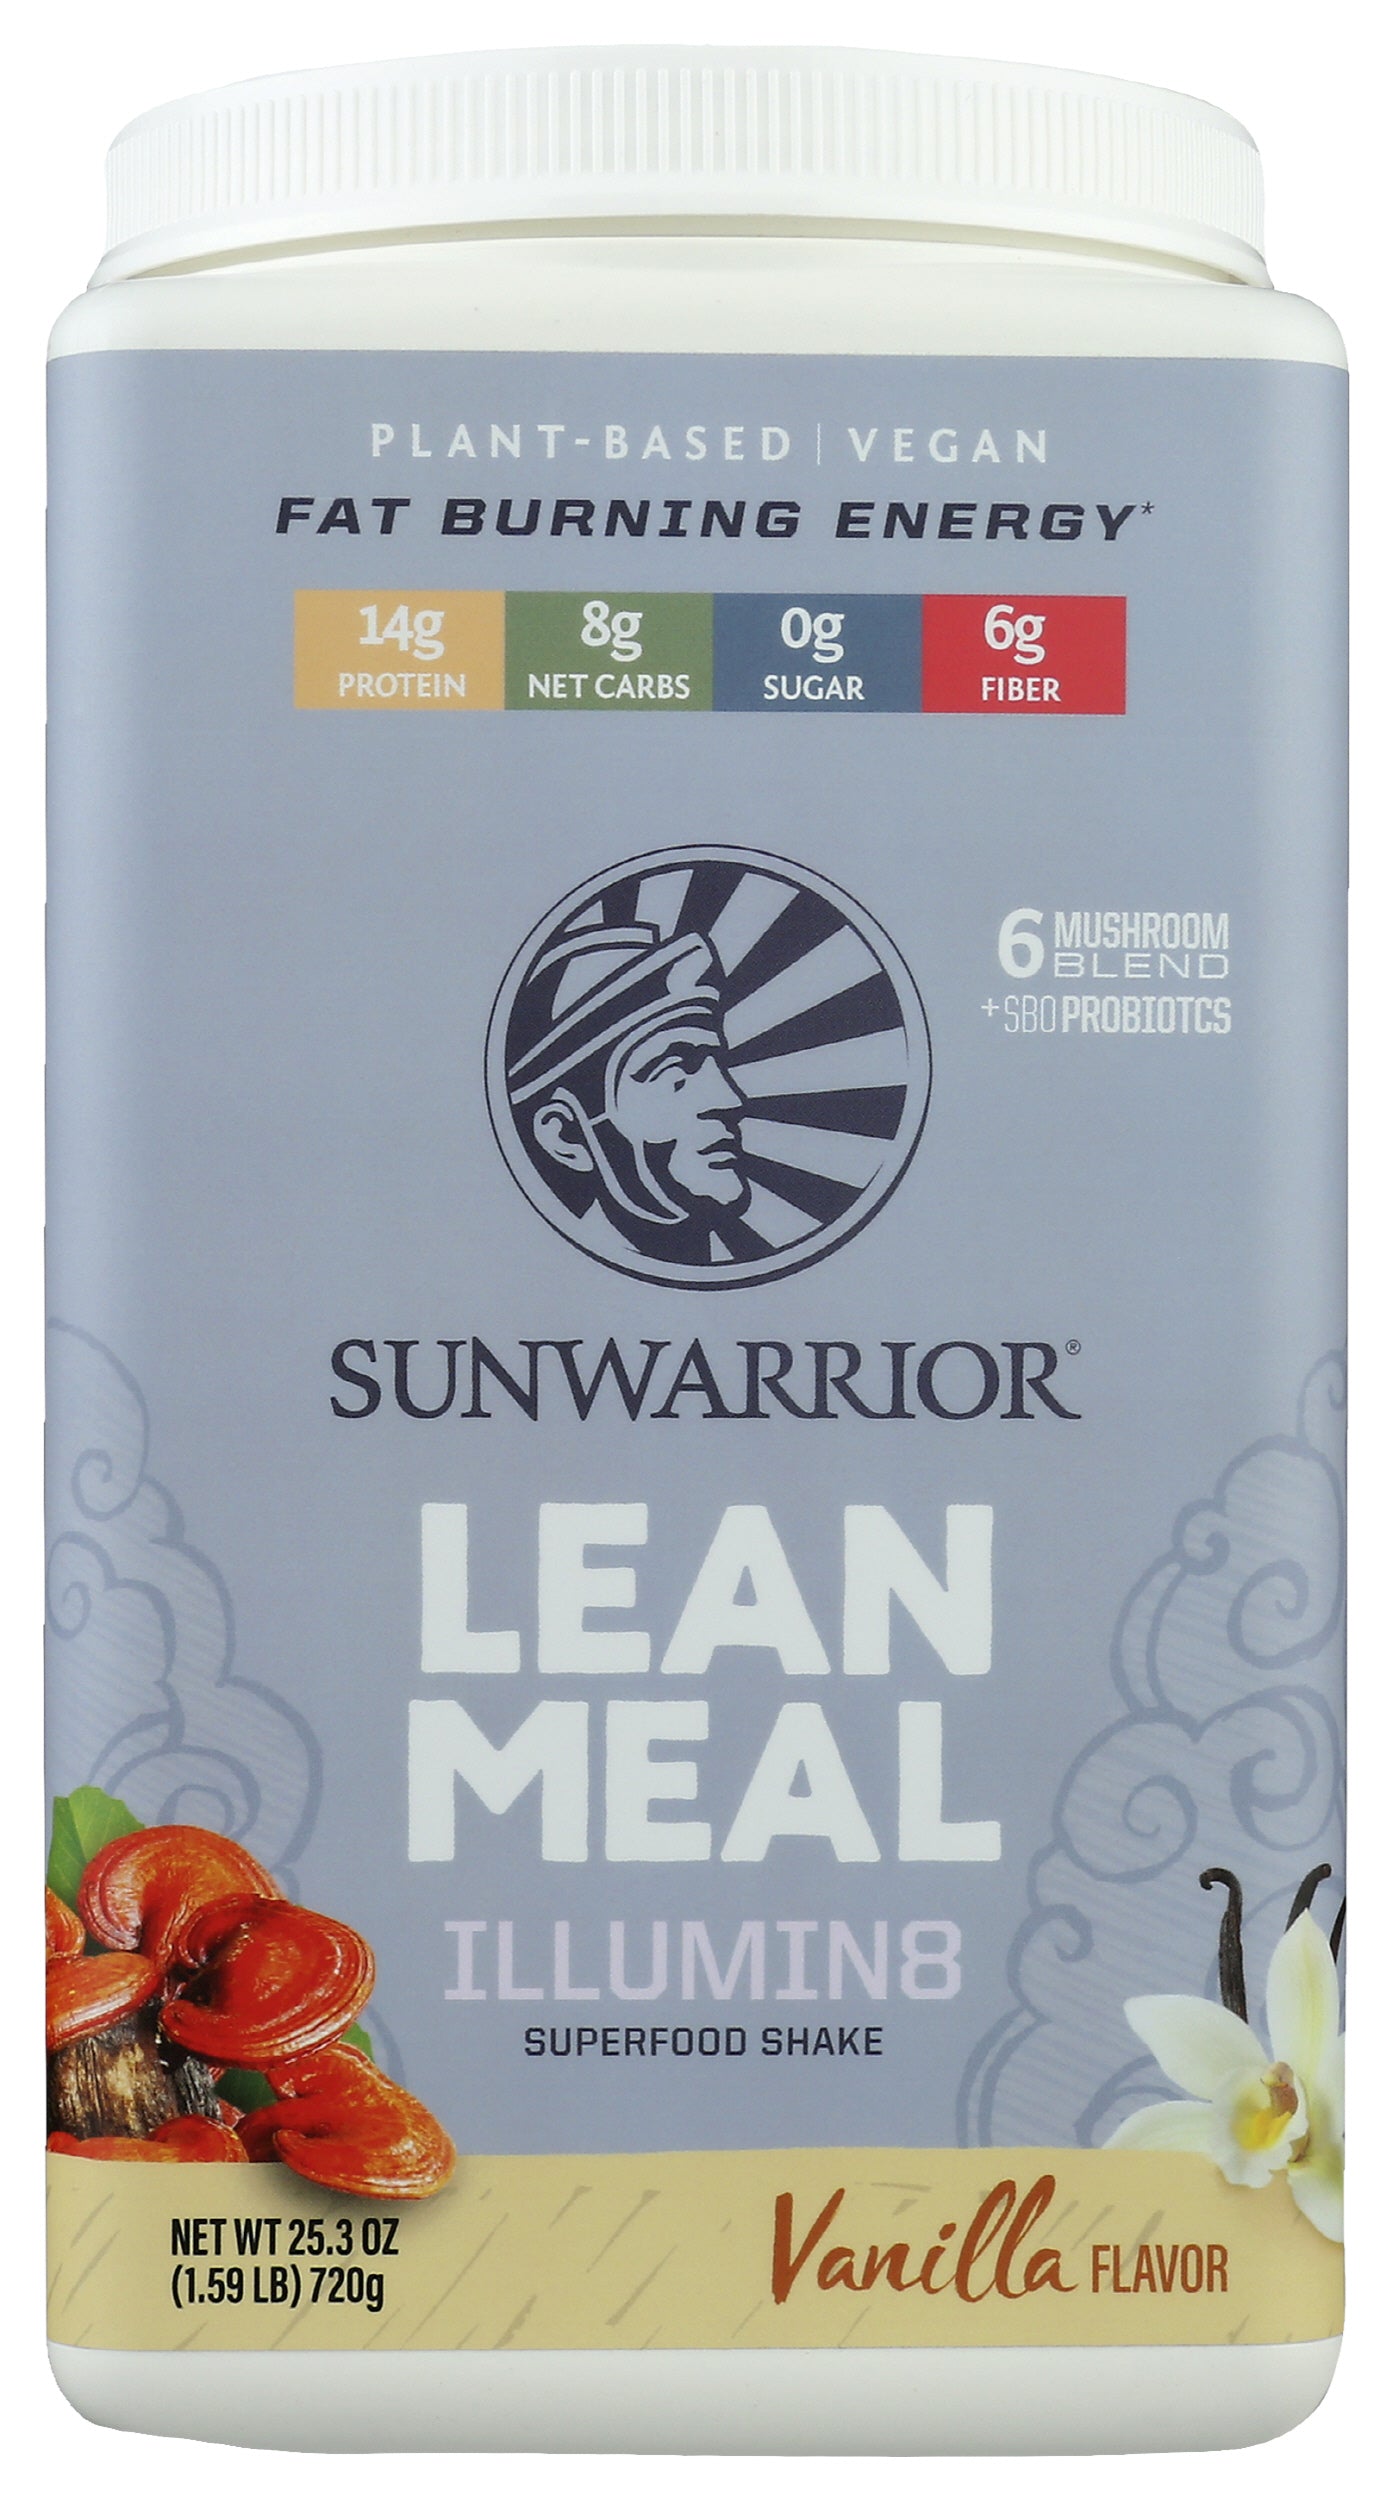 Sunwarrior Lean Meal Illumin8 Vanilla Flavor 720g Front of Tub